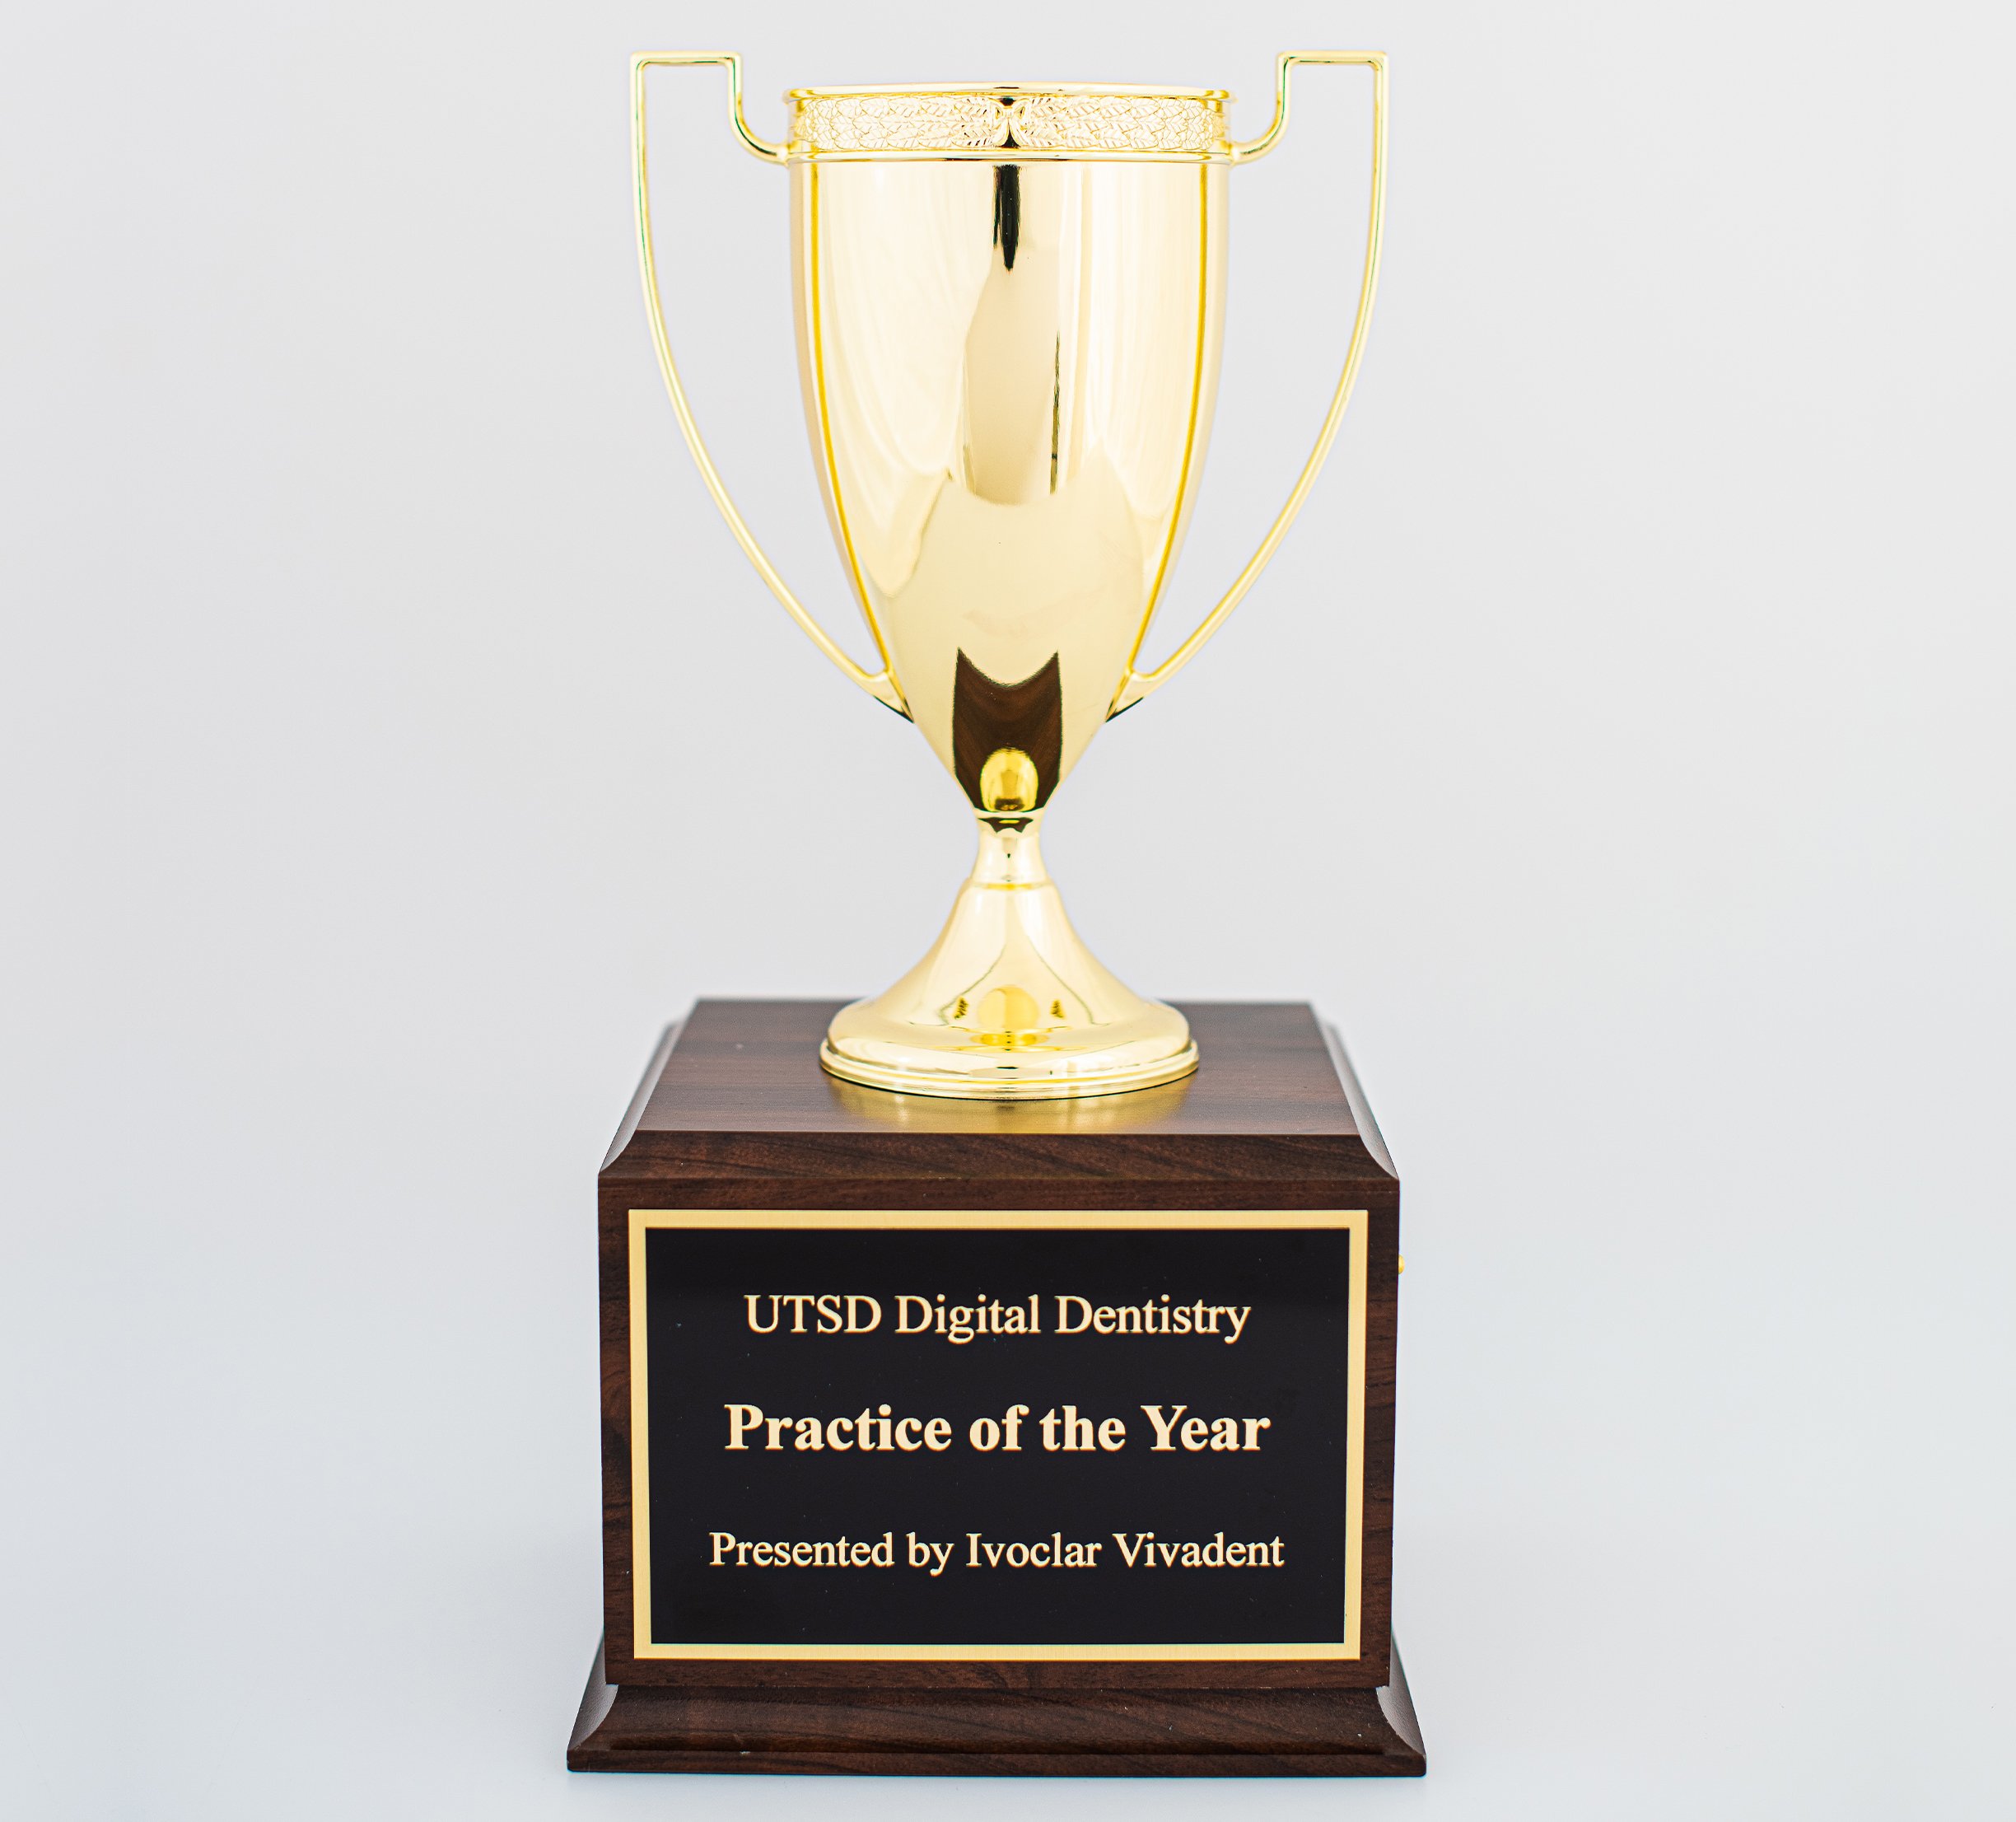 The UTSD Digital Dentistry Practice of the Year trophy.